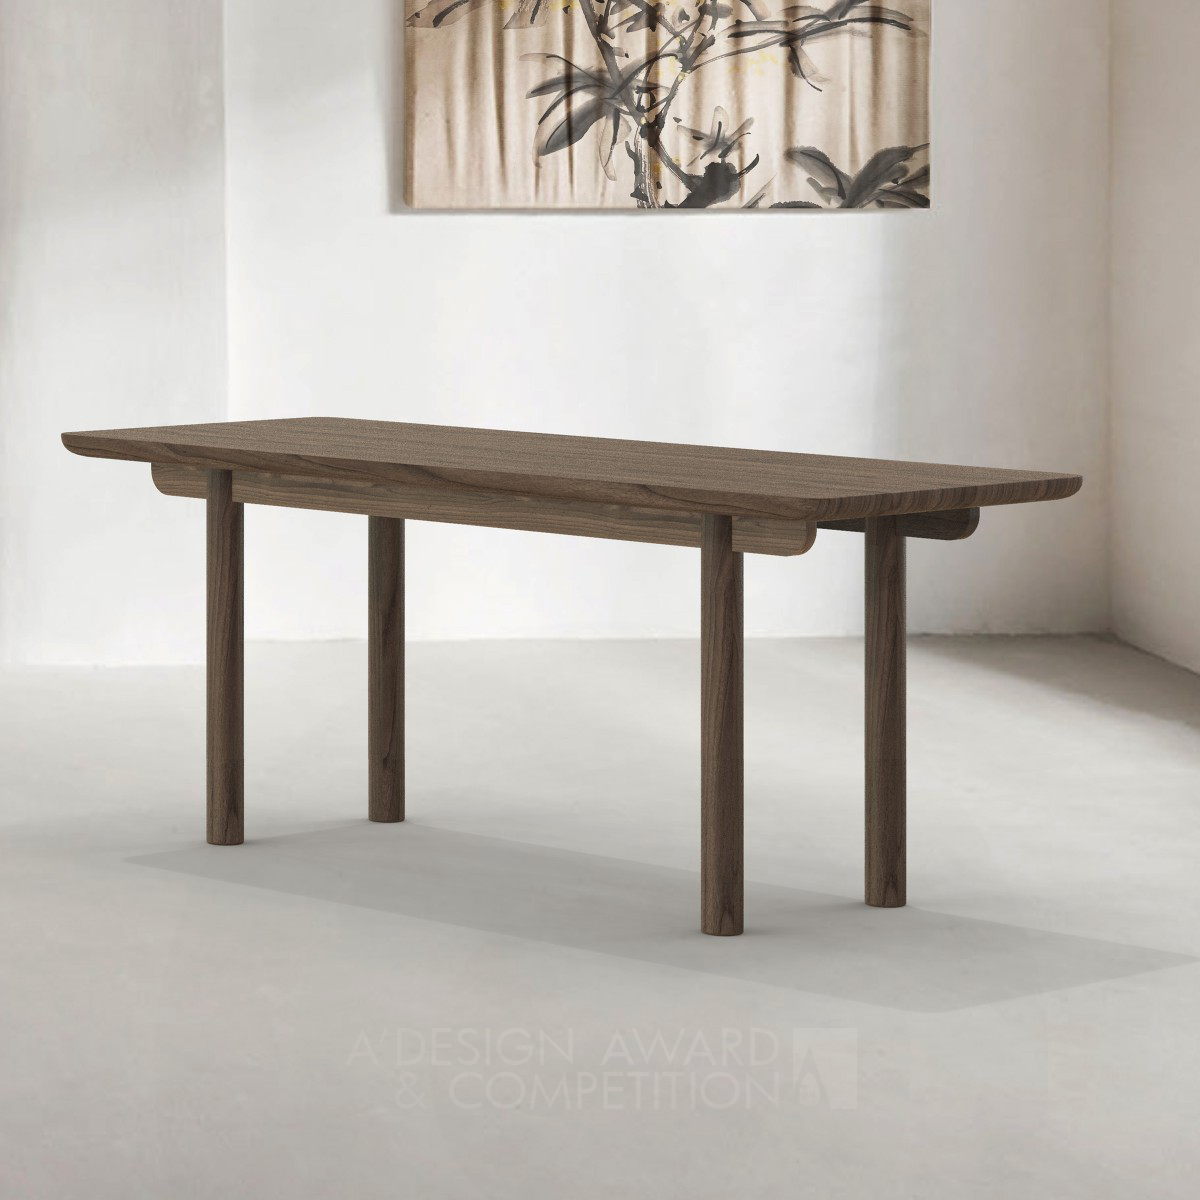 Lu Yi wins Iron at the prestigious A' Furniture Design Award with Bucket Arch Tea Table.